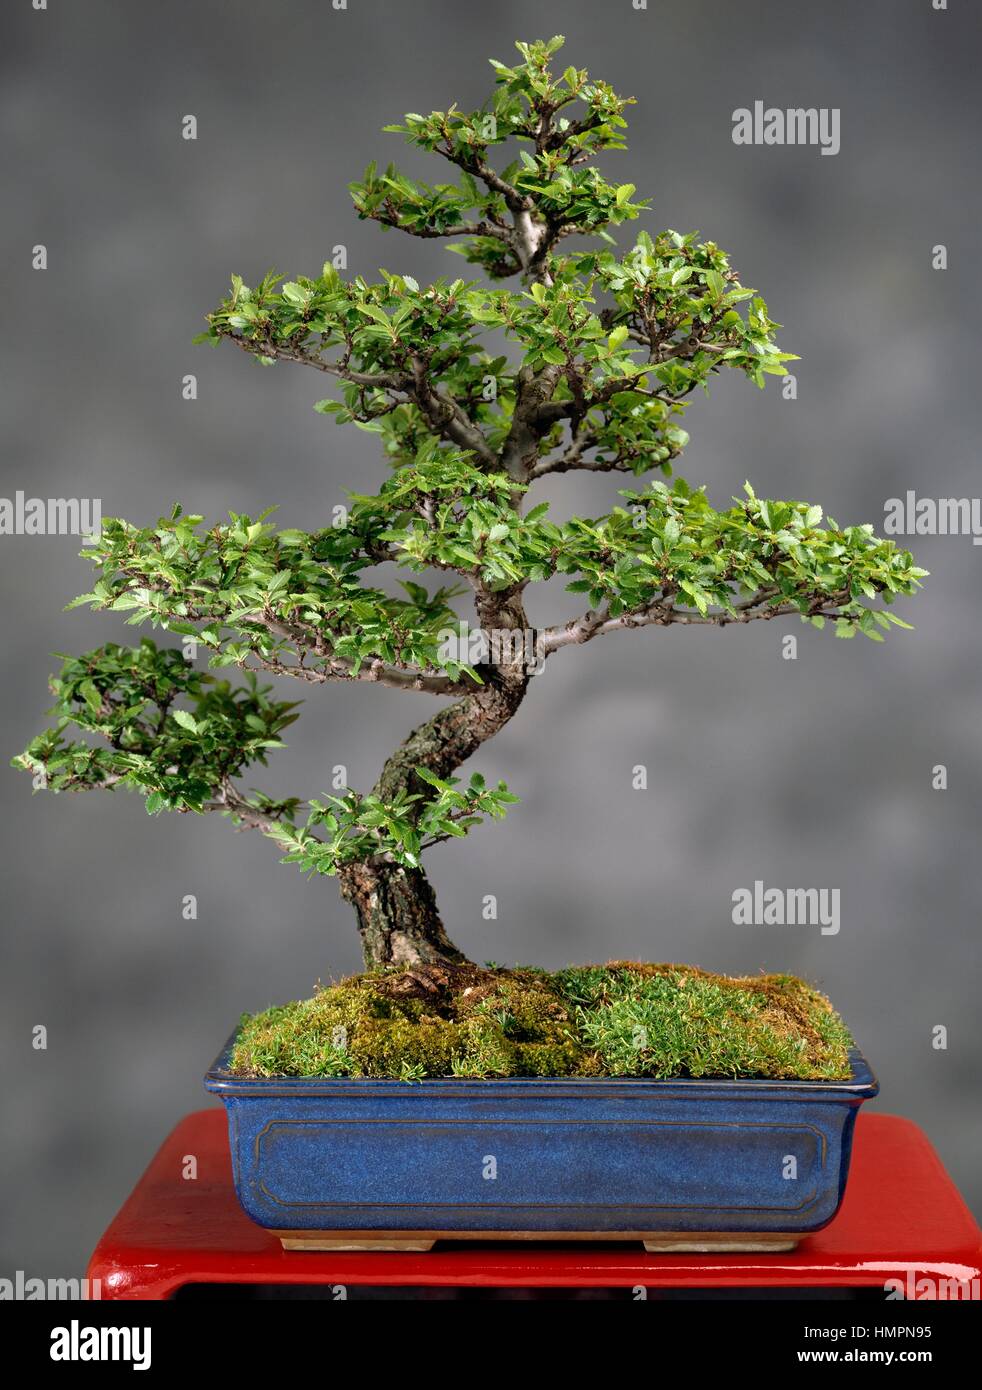 Chinese elm or lacebark elm (Ulmus parvifolia), Ulmaceae, height 30 cm. Stock Photo